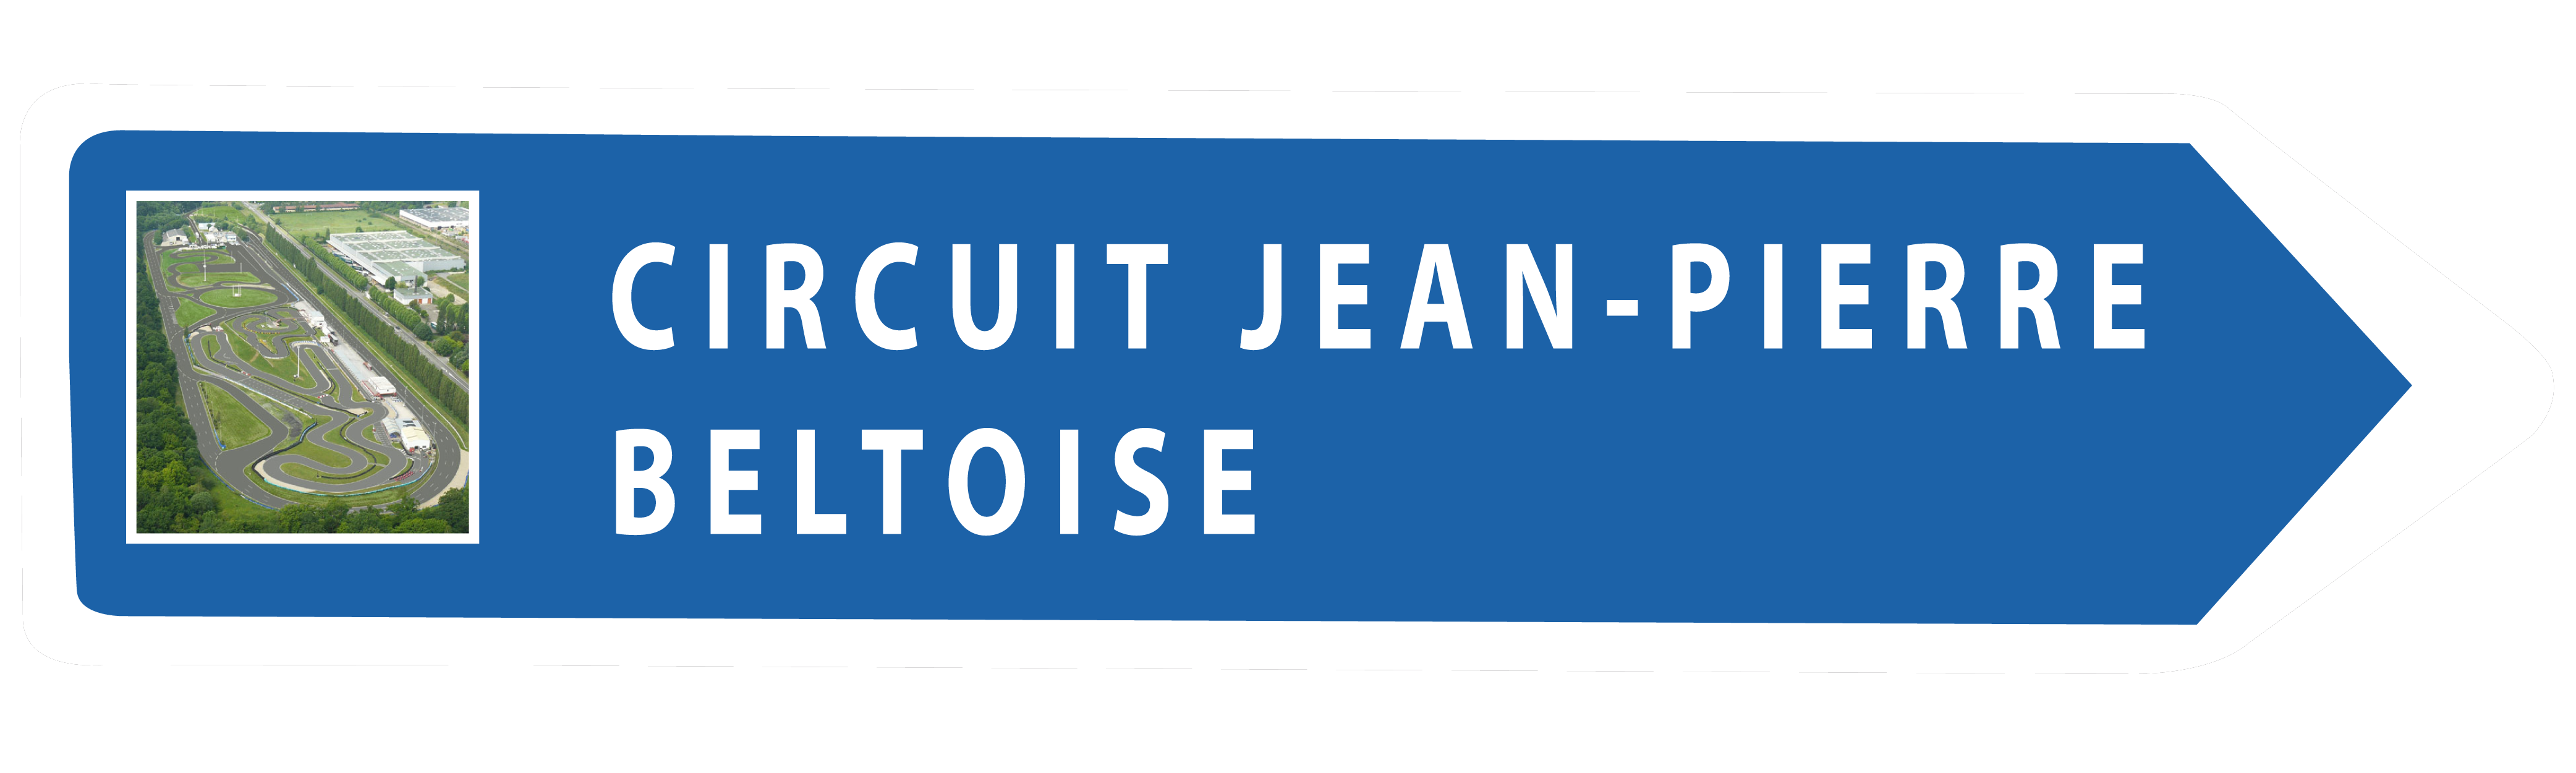 Panneau Direction Circuit Jean-Pierre Beltoise